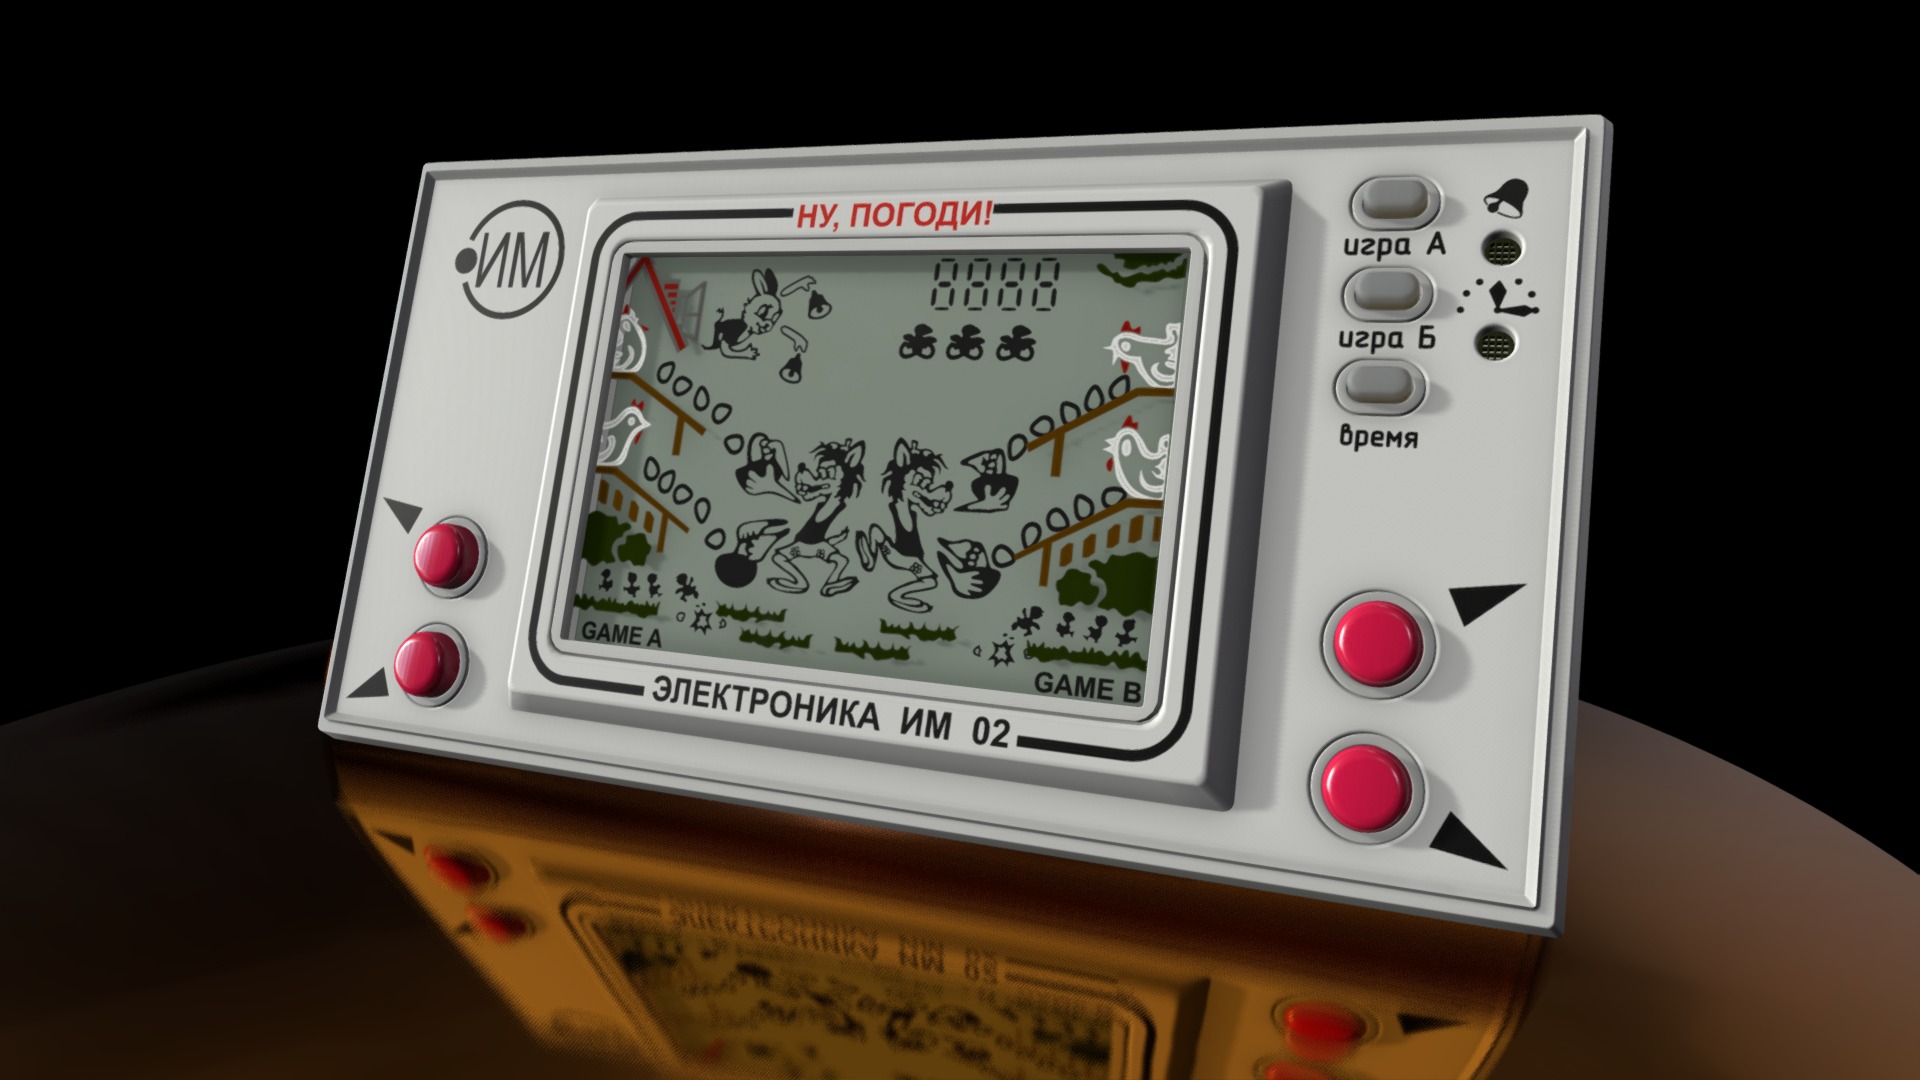 3D model Gameboy (Игровая приставка) – Волк ловит яйца - This is a 3D model of the Gameboy (Игровая приставка) - Волк ловит яйца. The 3D model is about a handheld game system.